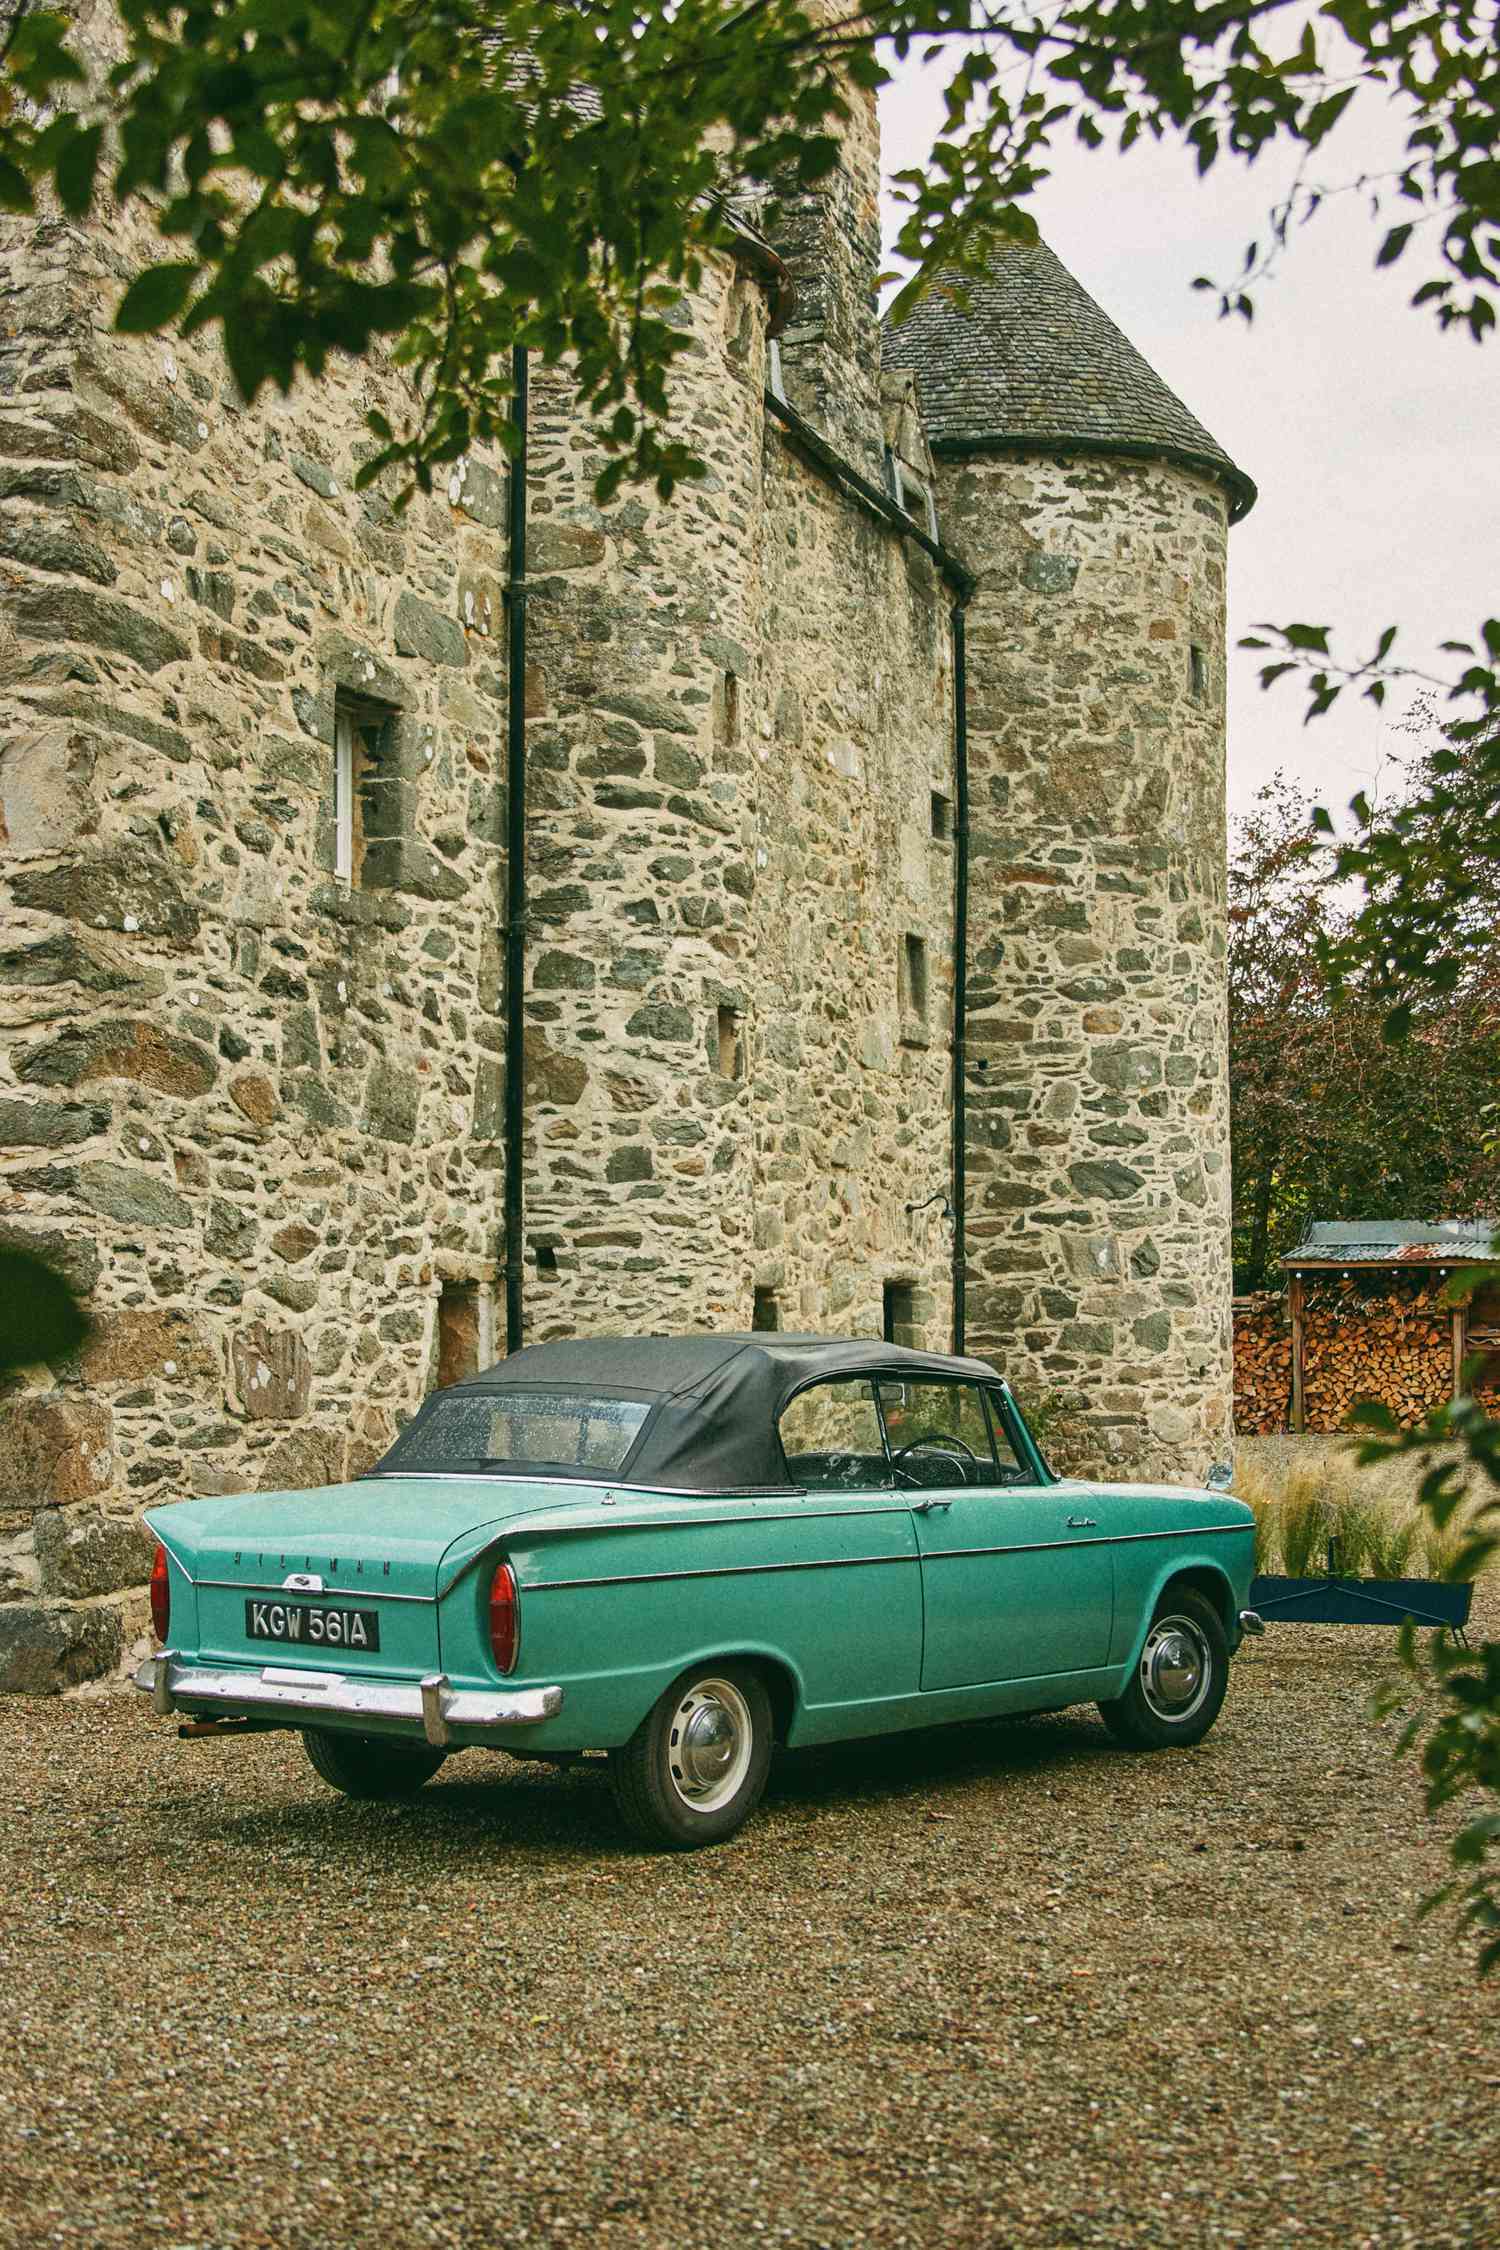 Car outside of castle